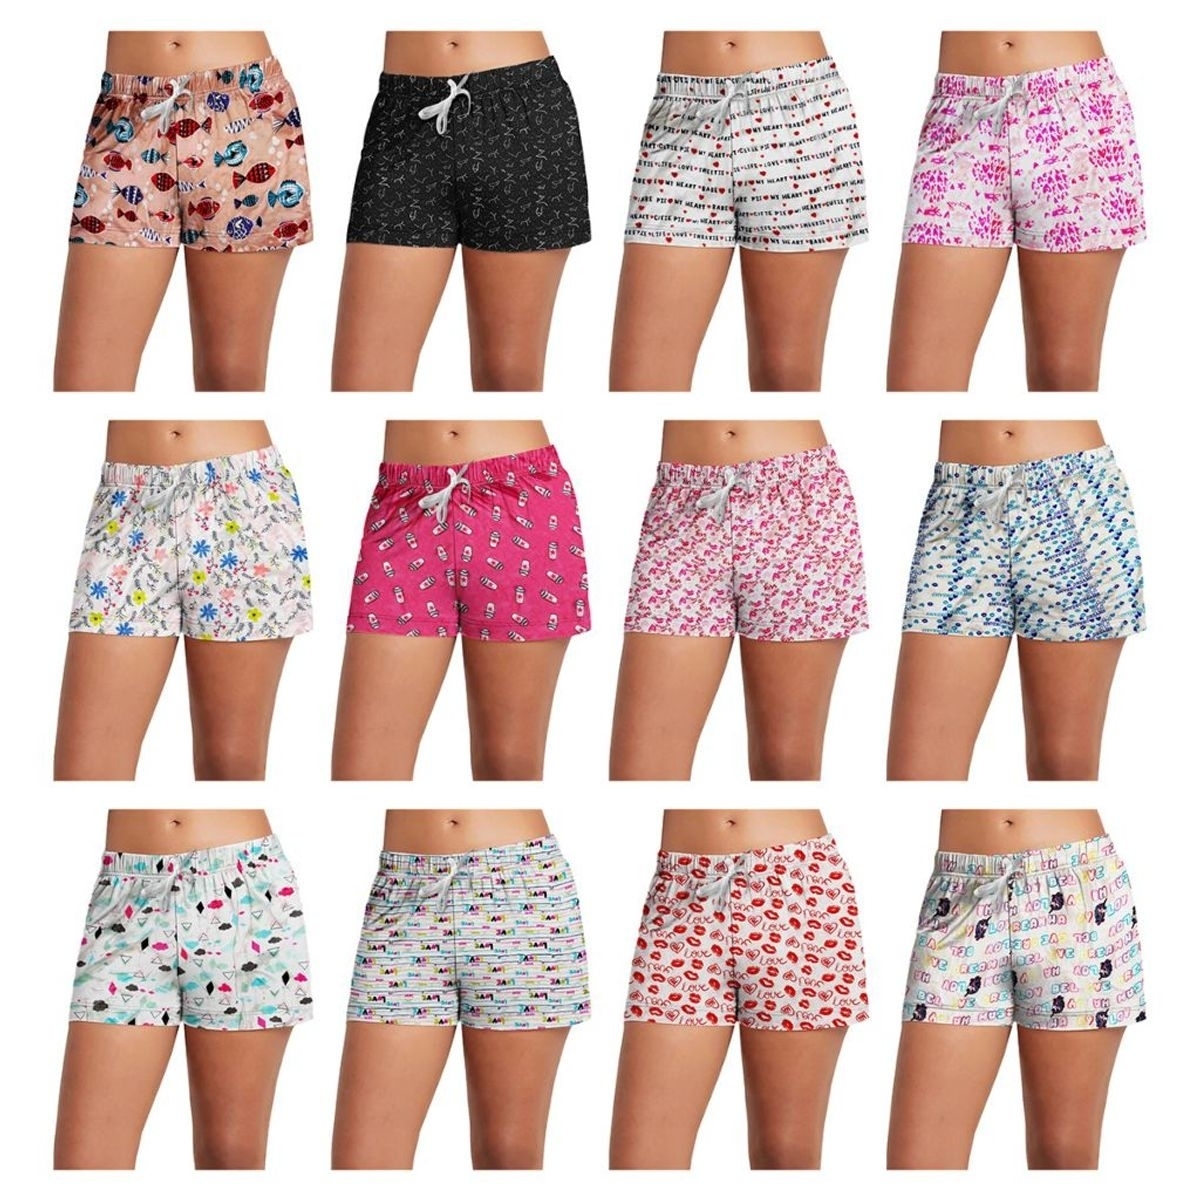 3-Pack: Women's Super-Soft Lightweight Fun Printed Comfy Lounge Bottom Pajama Shorts W/ Drawstring - Medium, Shapes